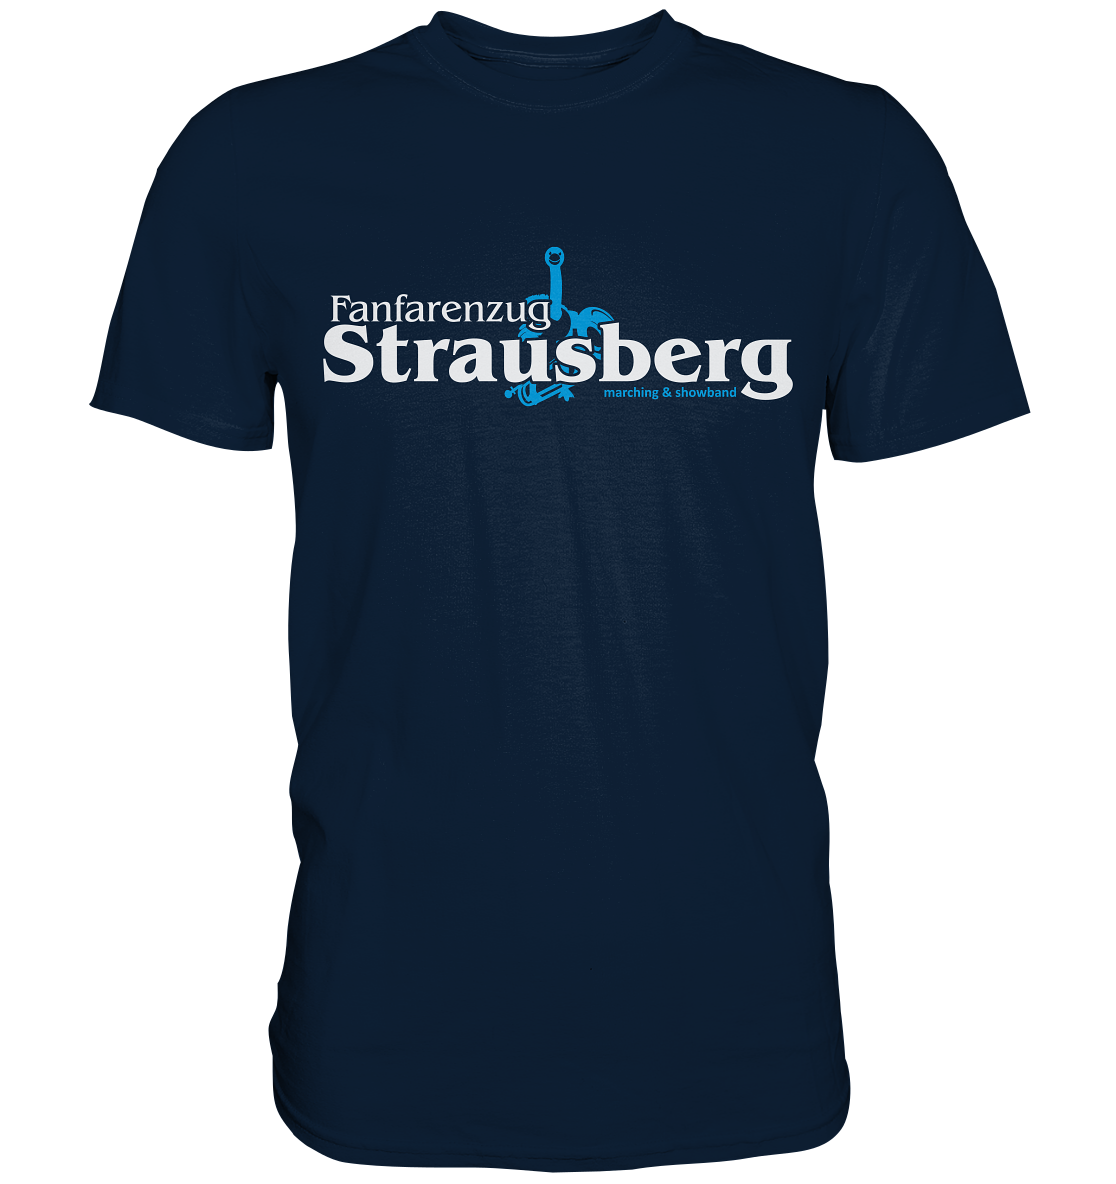 Fanfarenzug-Strausberg-Shirt-bandstyle